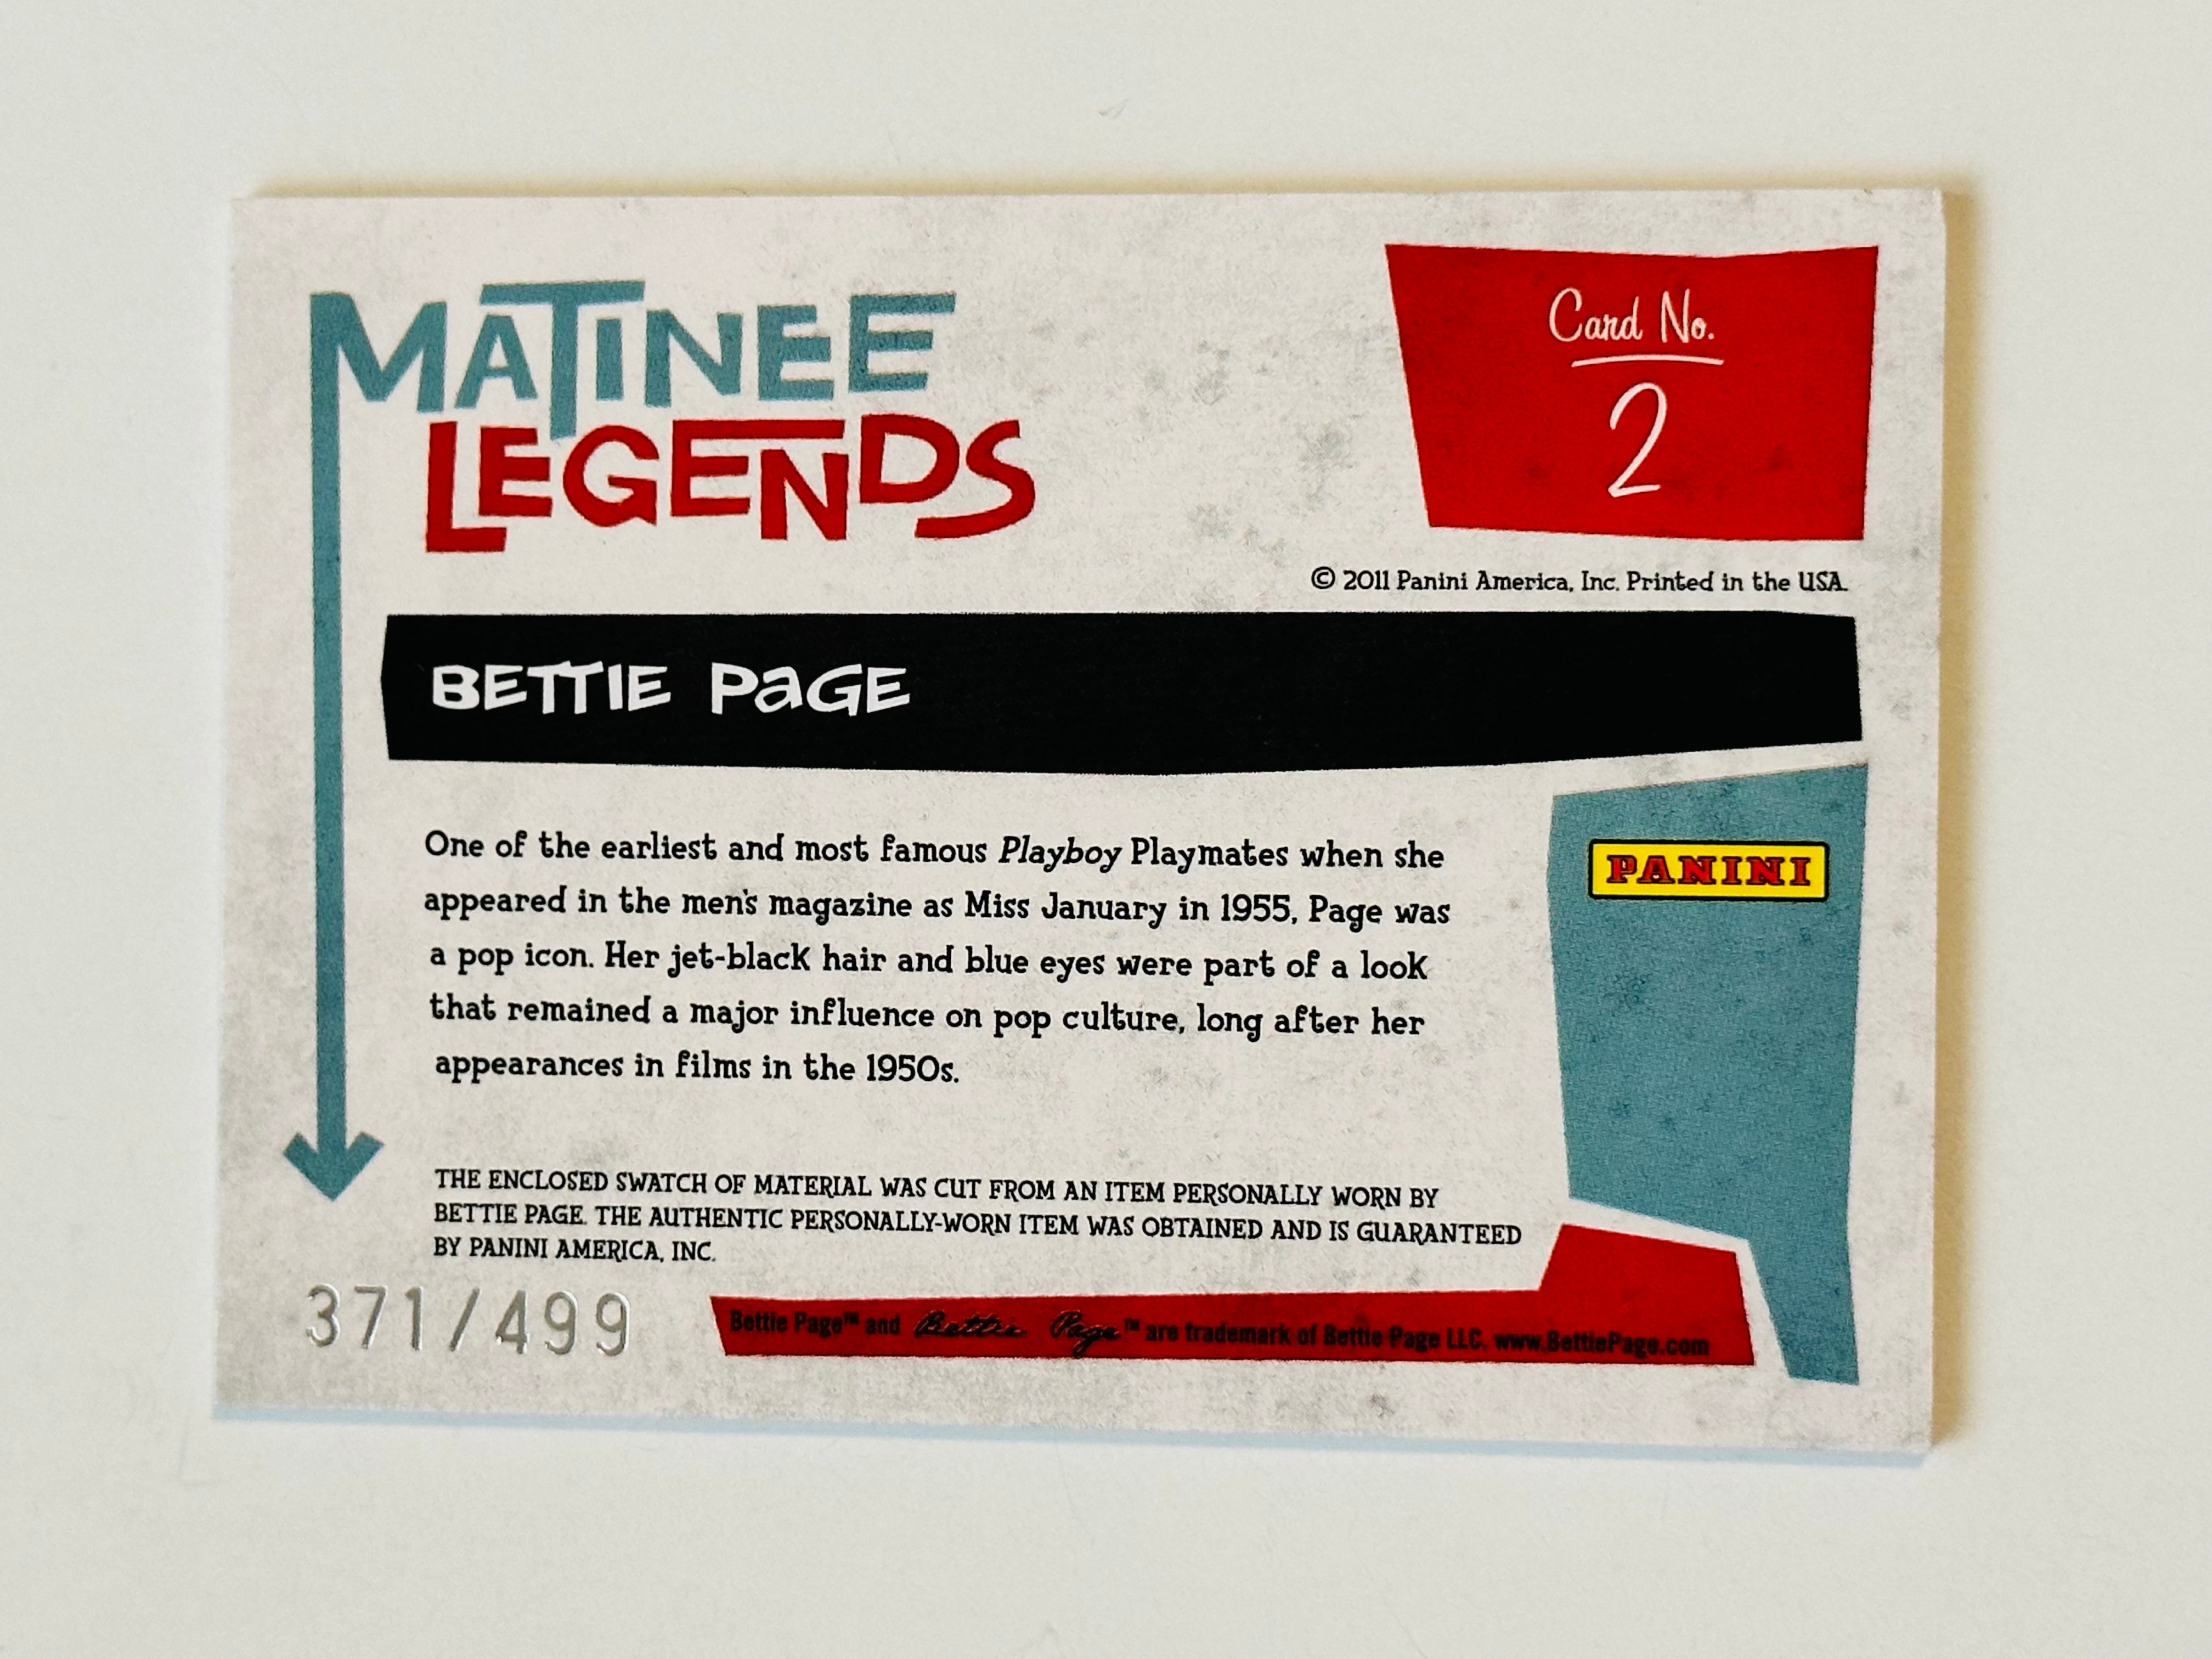 Bettie Page rare numbered memorabilia insert card